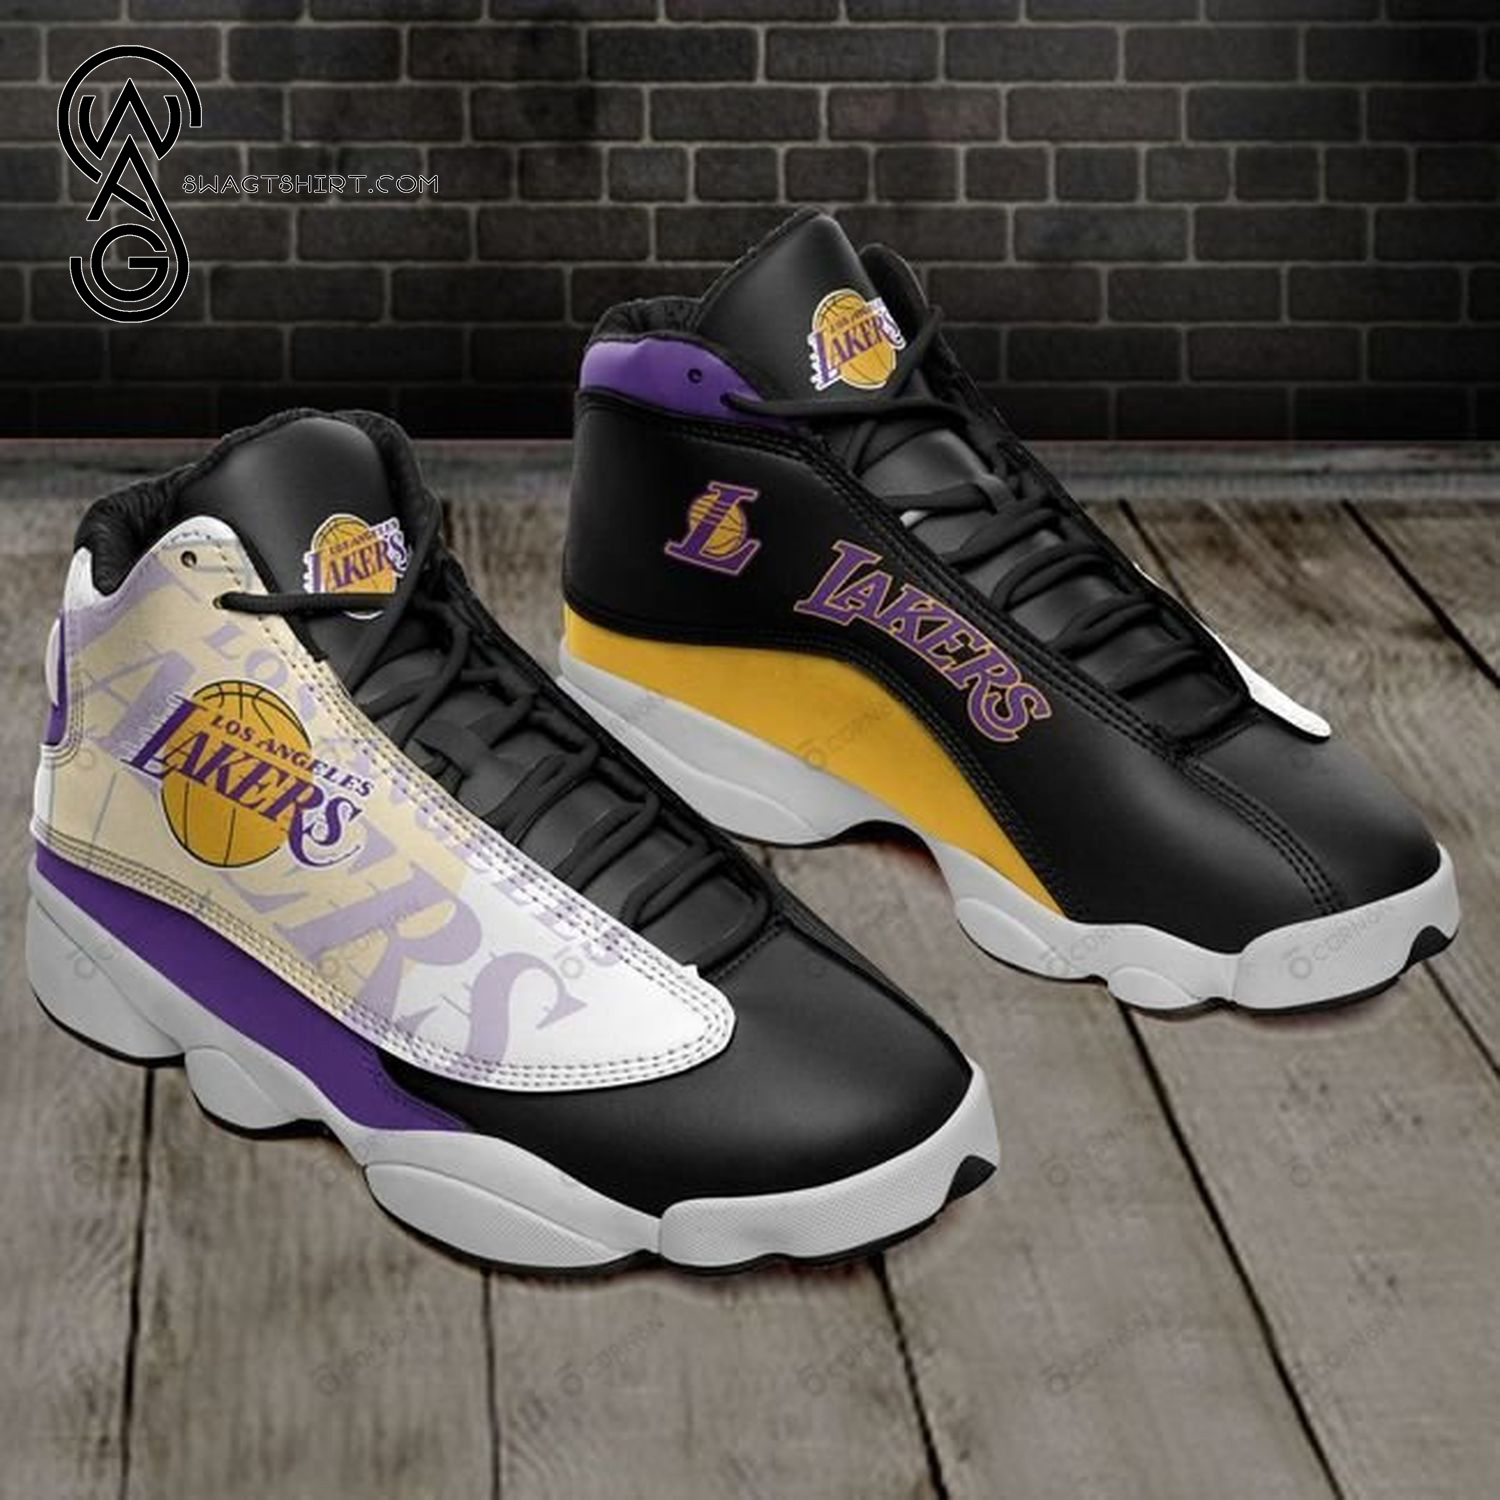 Los Angeles Lakers Team Air Jordan 13 Shoes